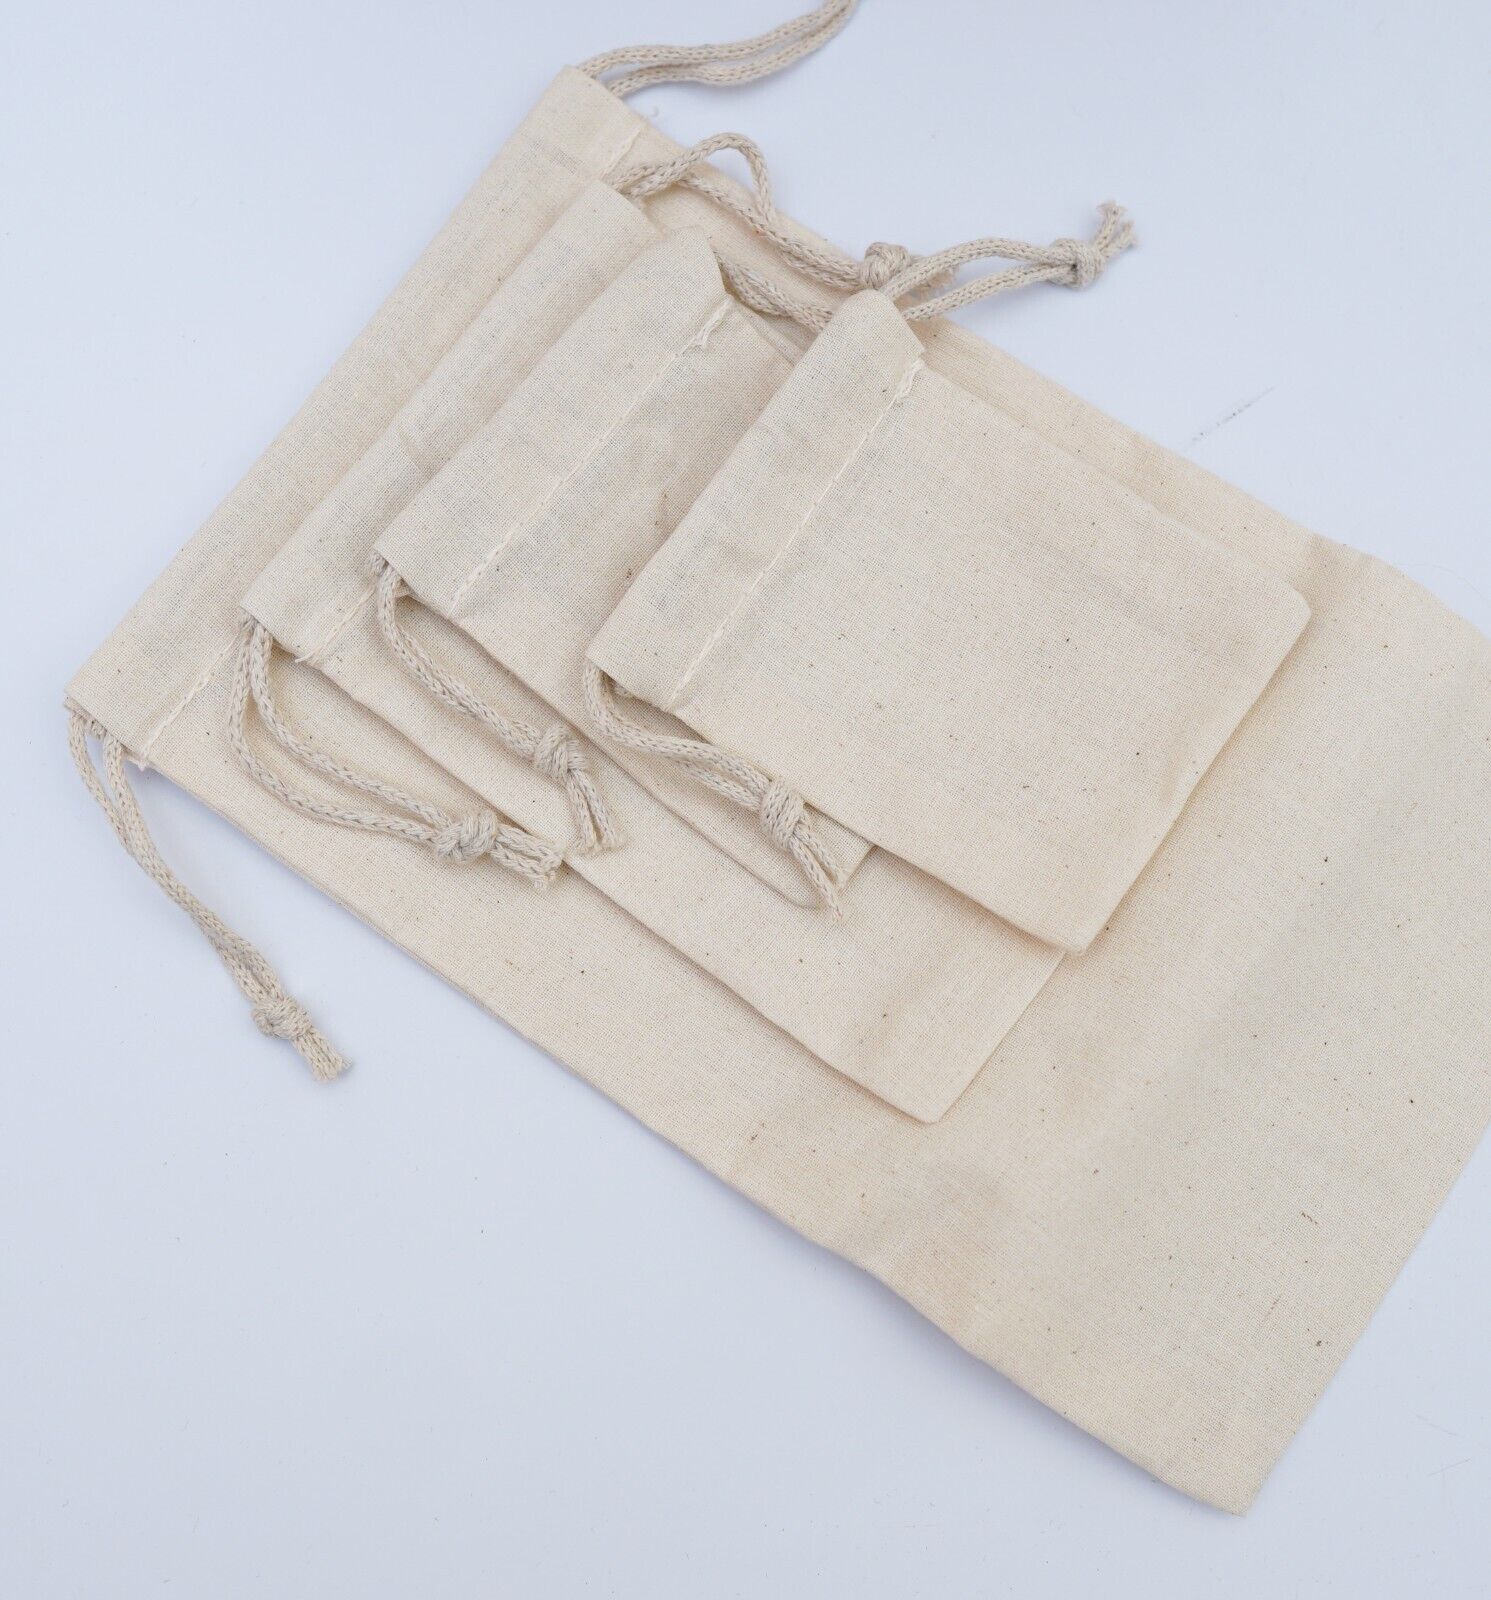 2 x 3 Inches 100% Cotton Reusable Storage Premium Quality Double Drawstring Bags